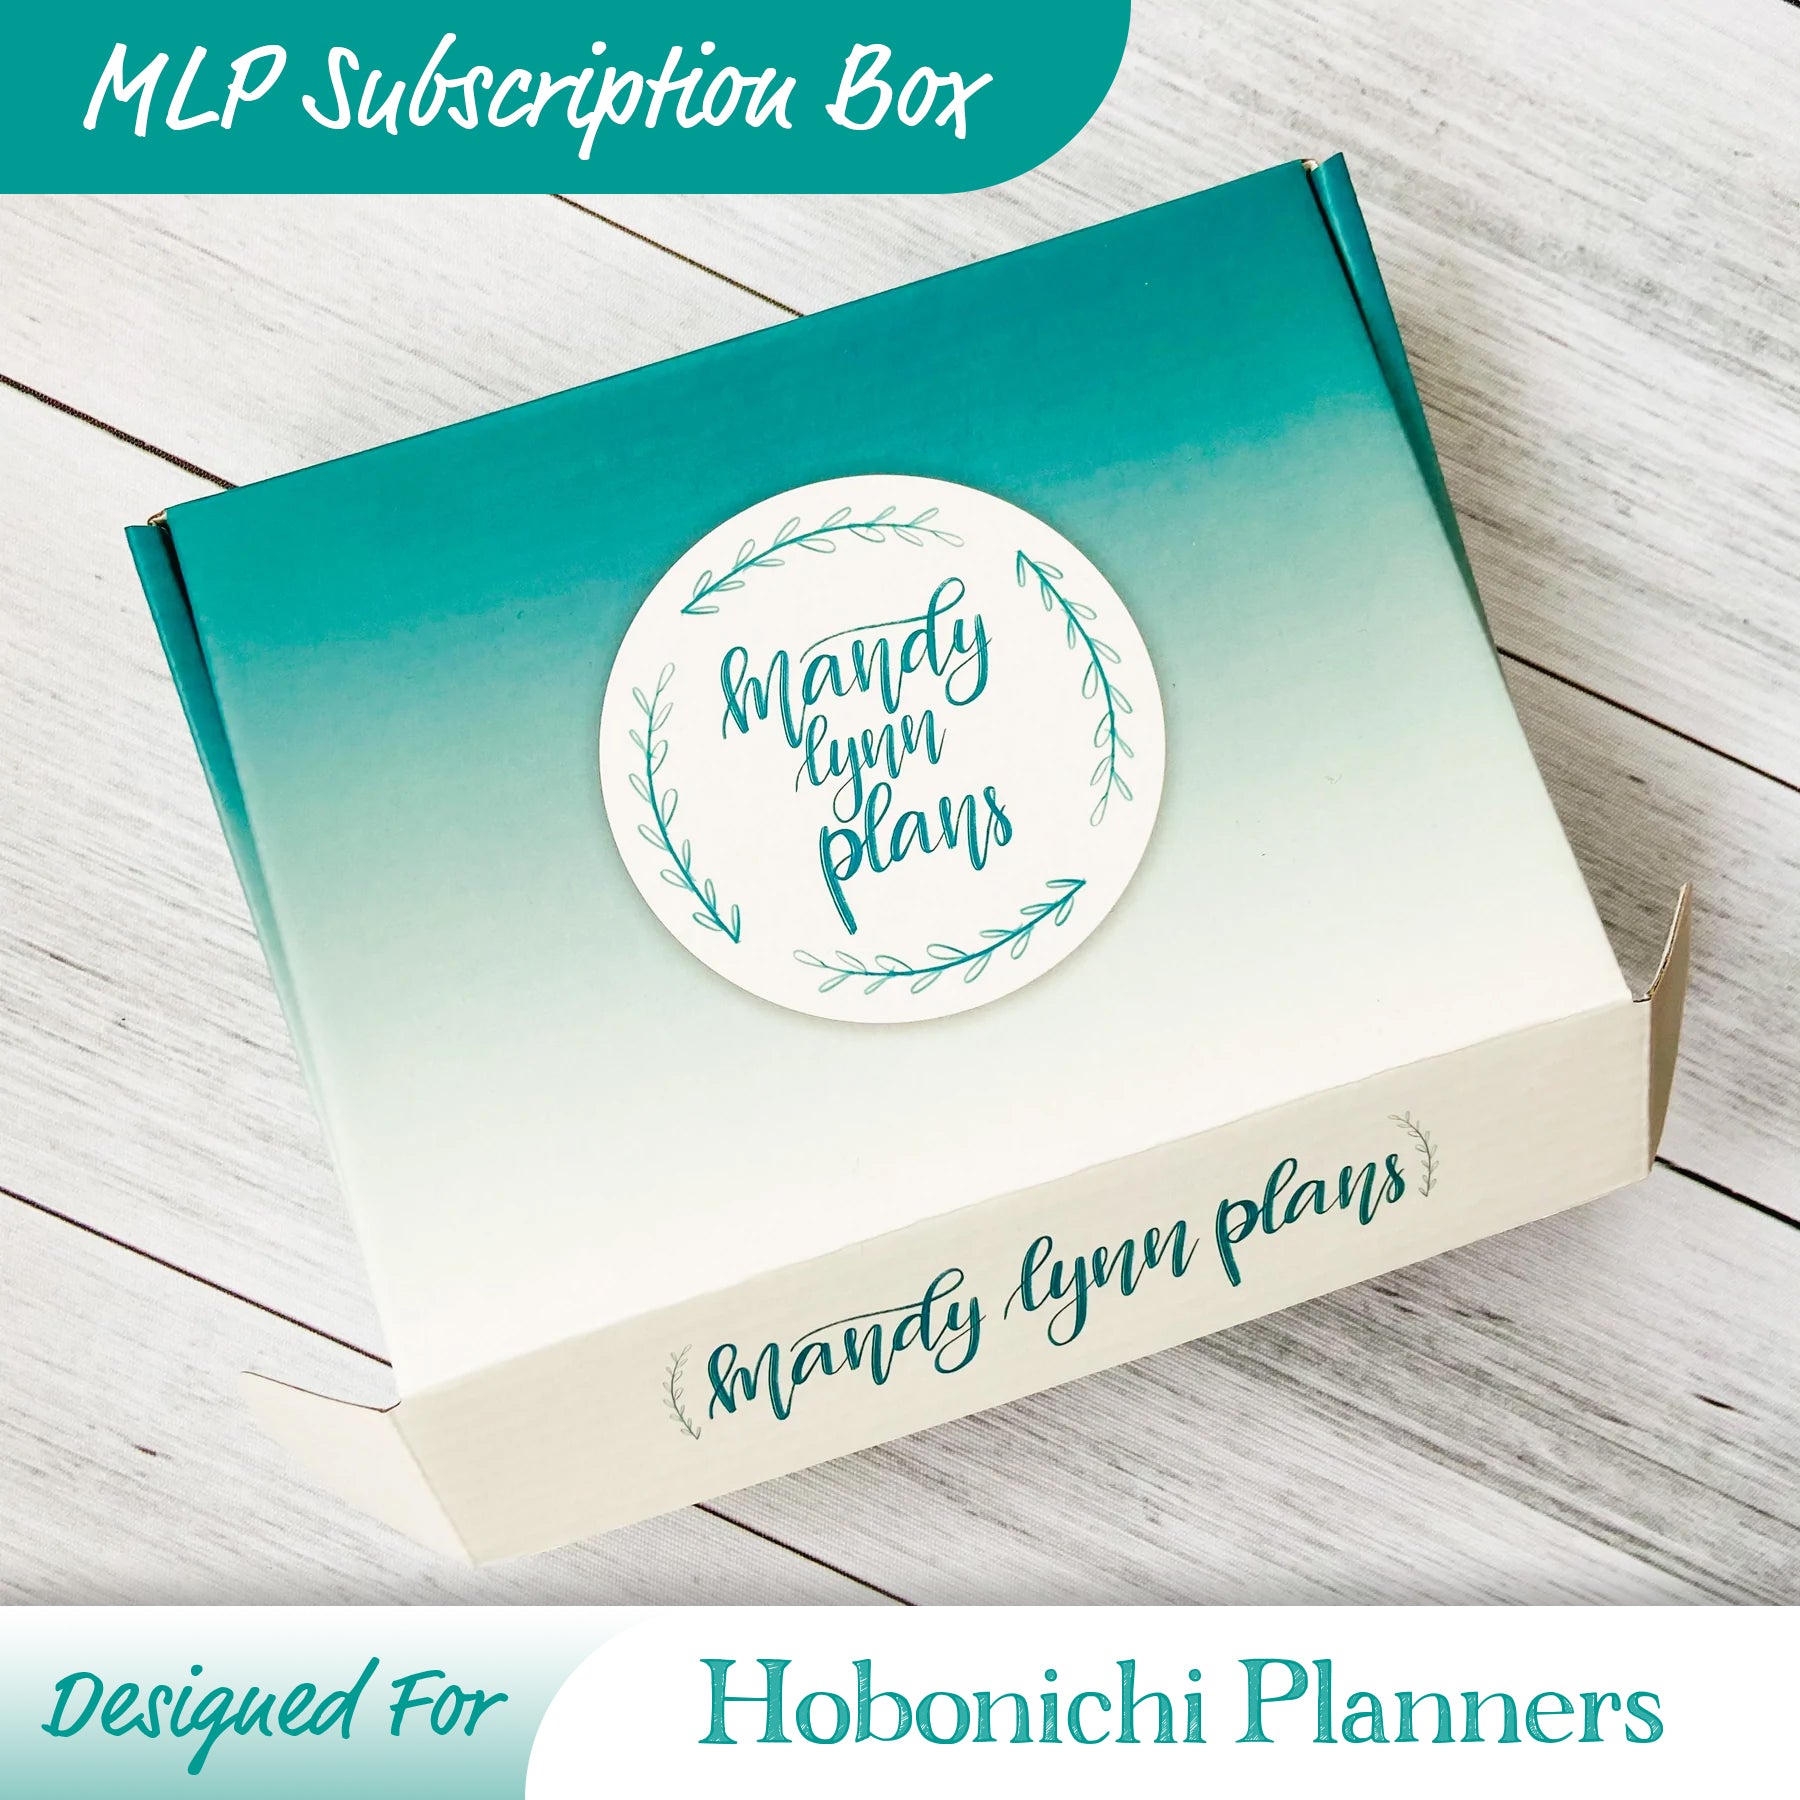 MLP Subscription Box (Hobonichi) – Mandy Lynn Plans